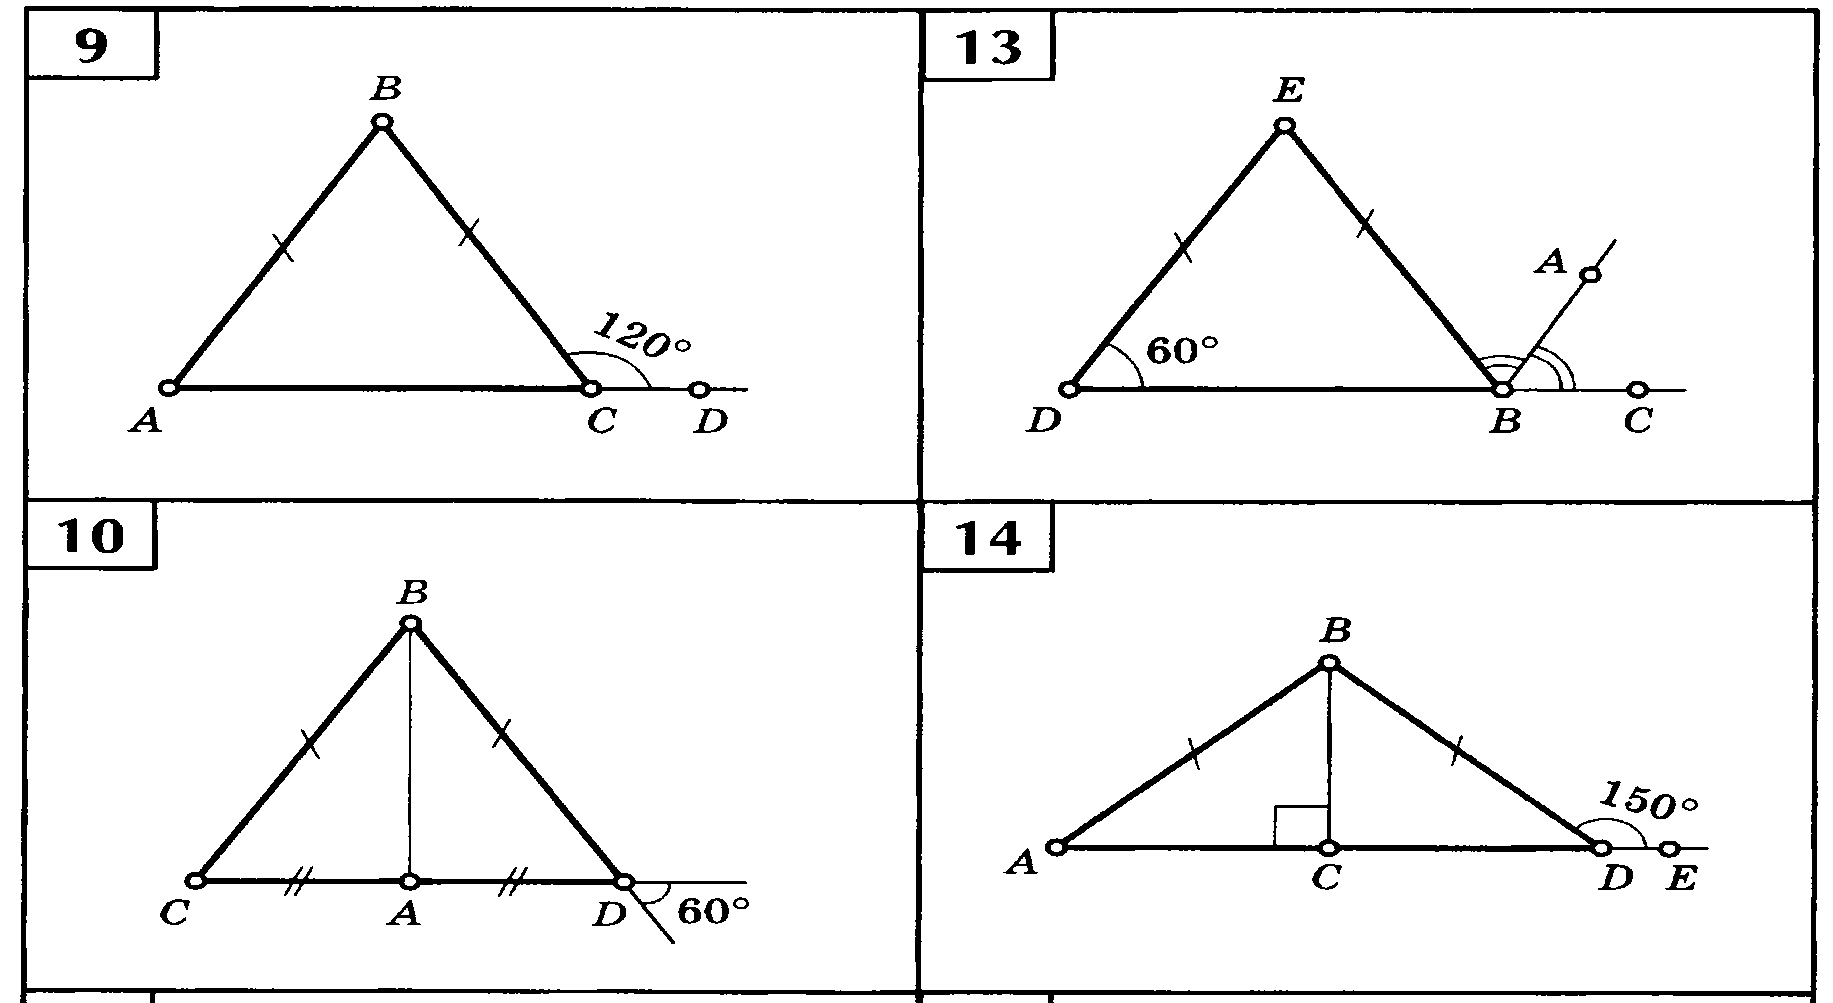 Задачи на равносторонний треугольник